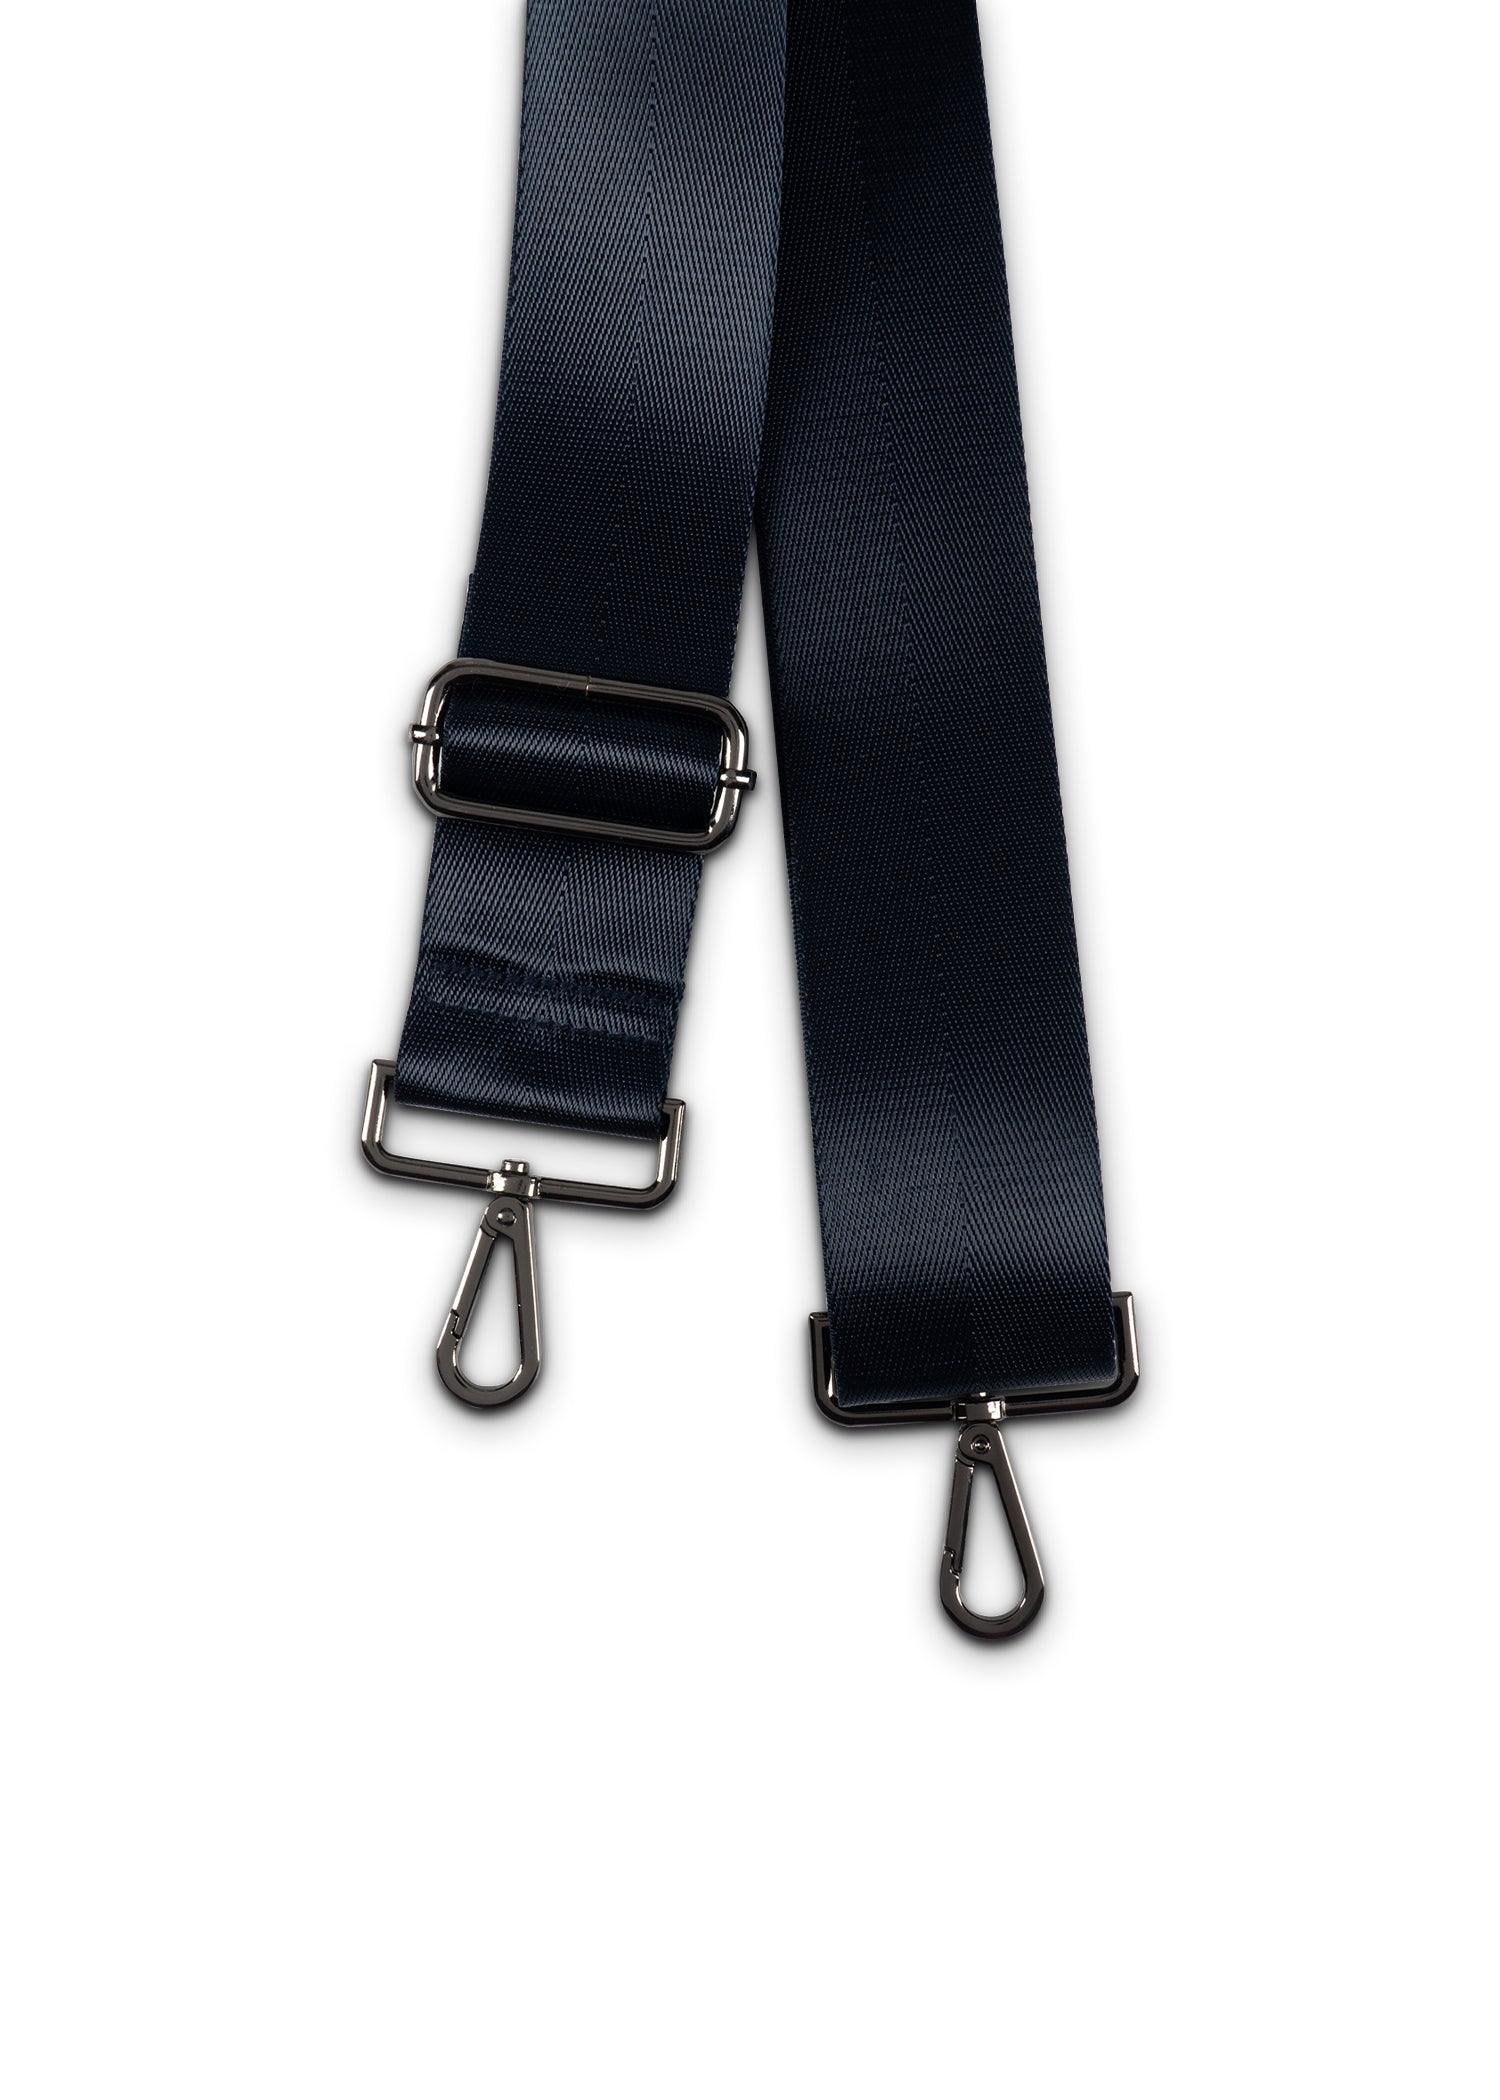 solid black handbag strap